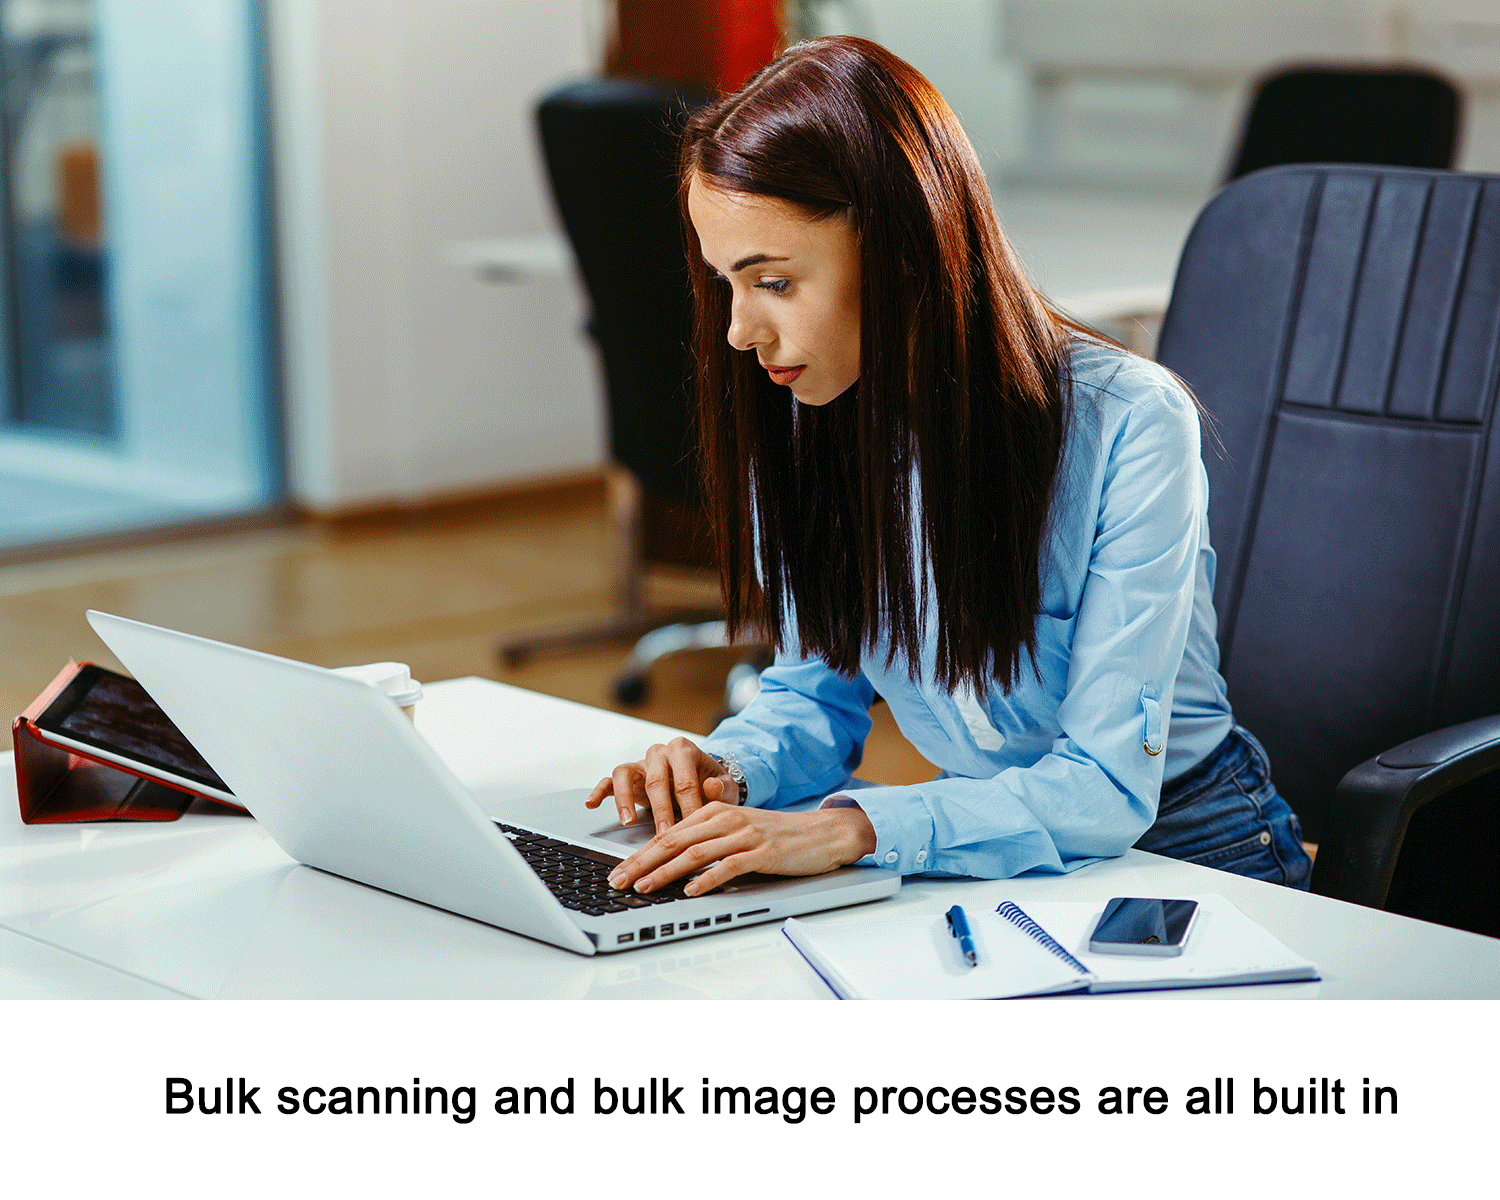 Bulking Image Process and file Conversion